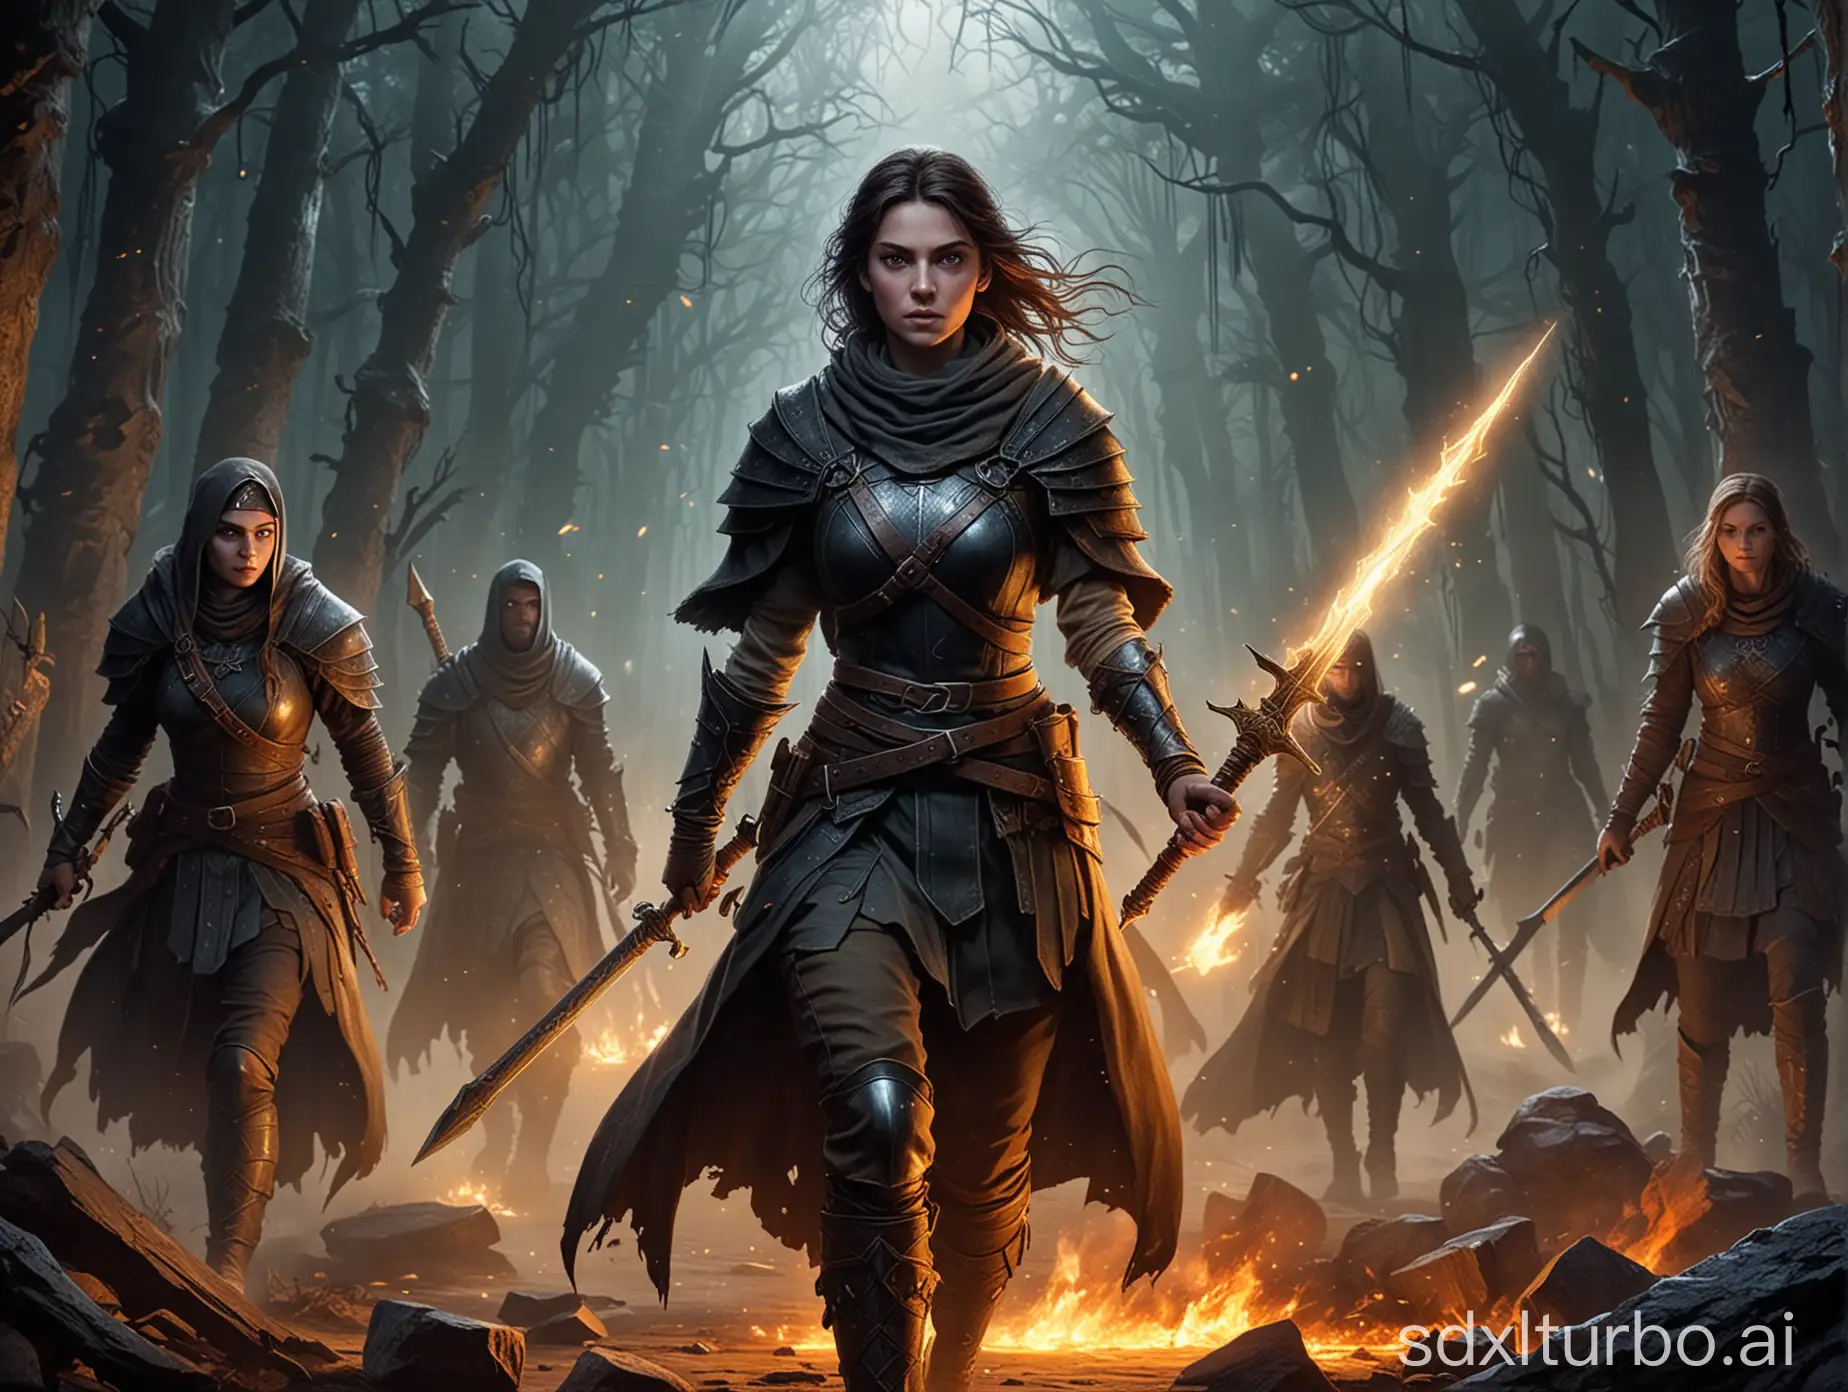 Sorceress-Arya-and-Allies-Battling-Dark-Forces-in-Forgotten-Ruins